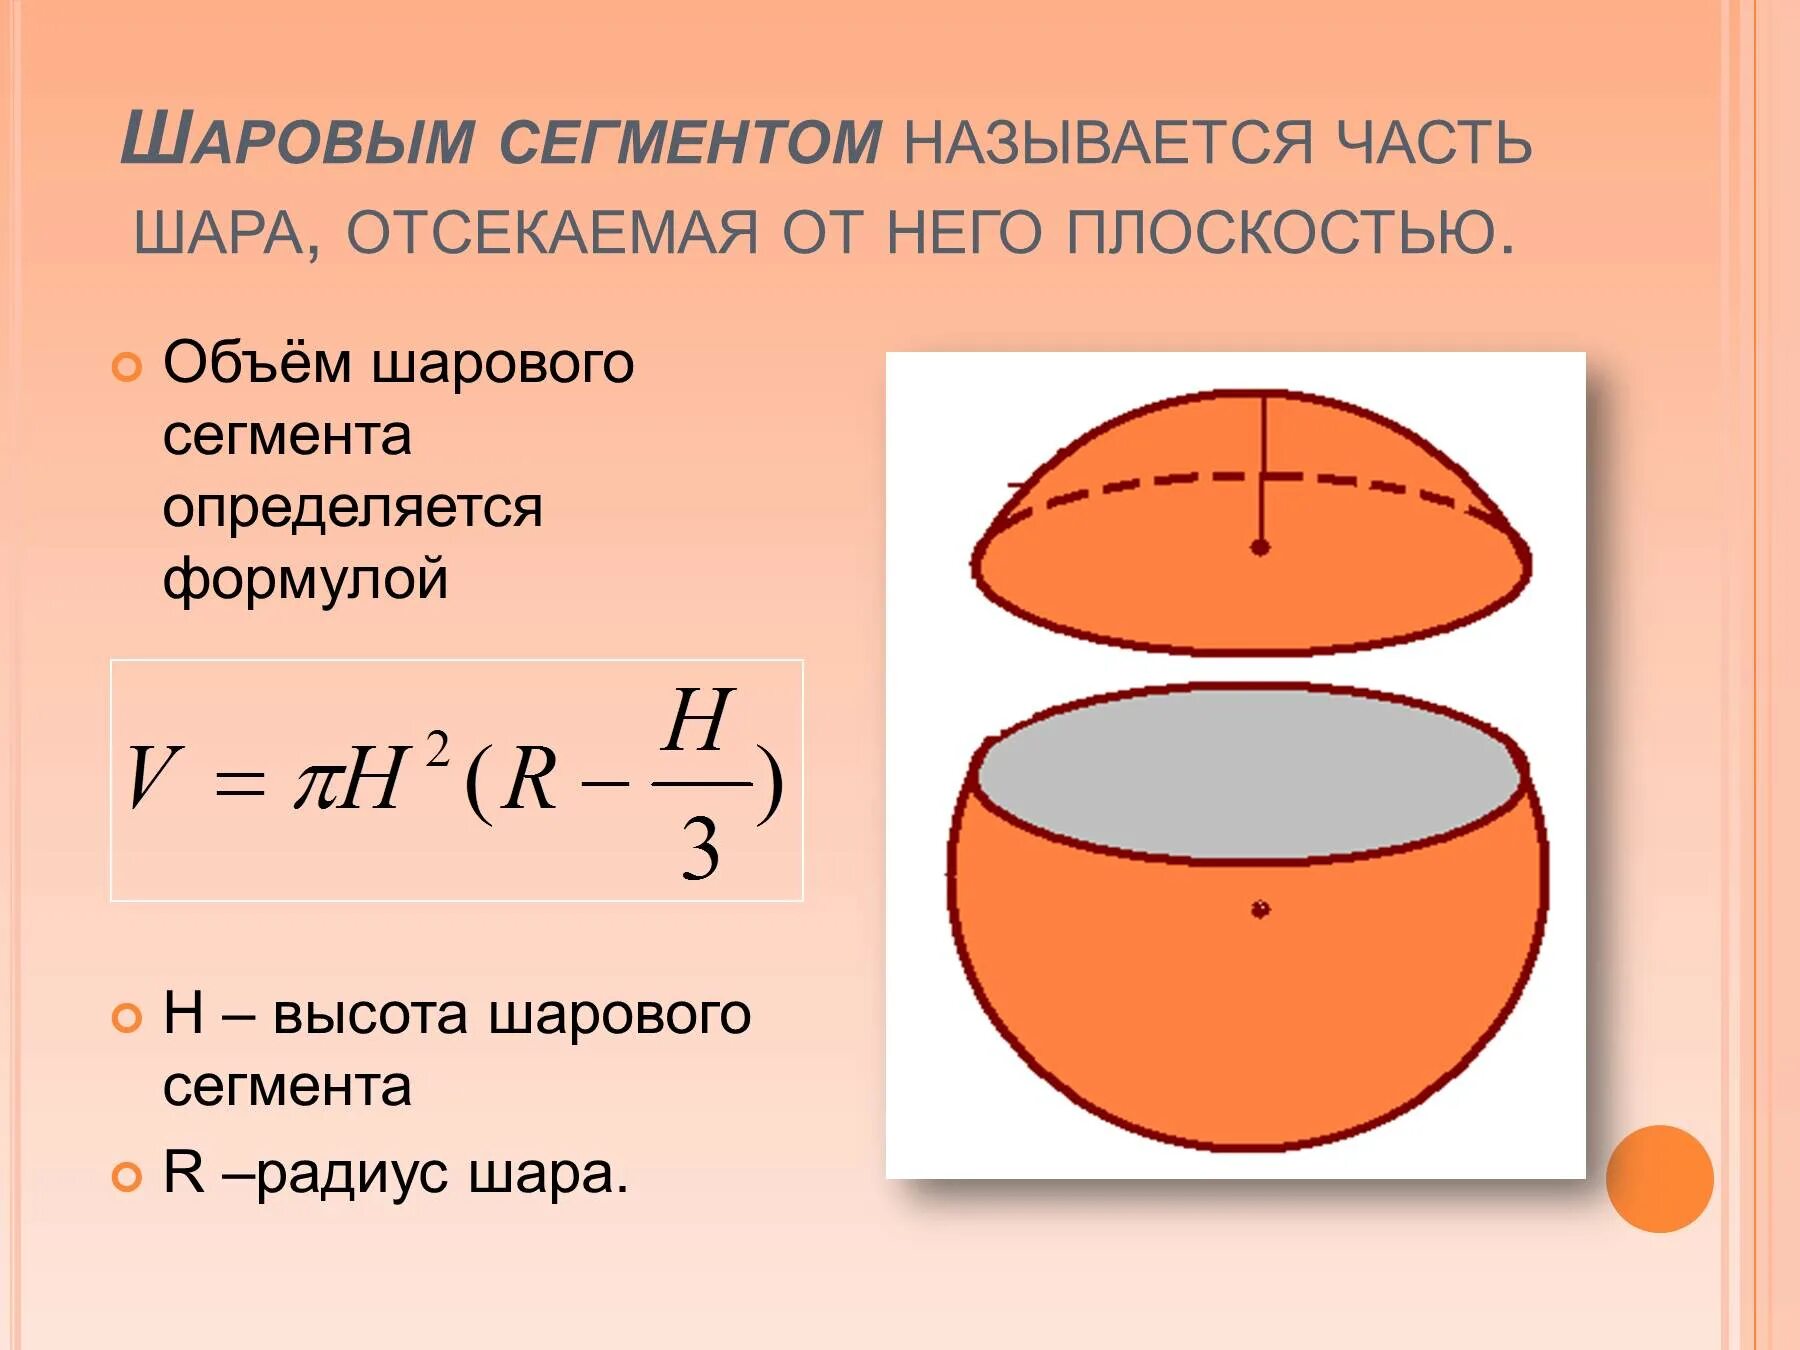 Шаровый слой формула. Формула объема части шара. Объём сегмента шара формула. Объем шарового сегмента формула. Объем шара и его частей формулы.